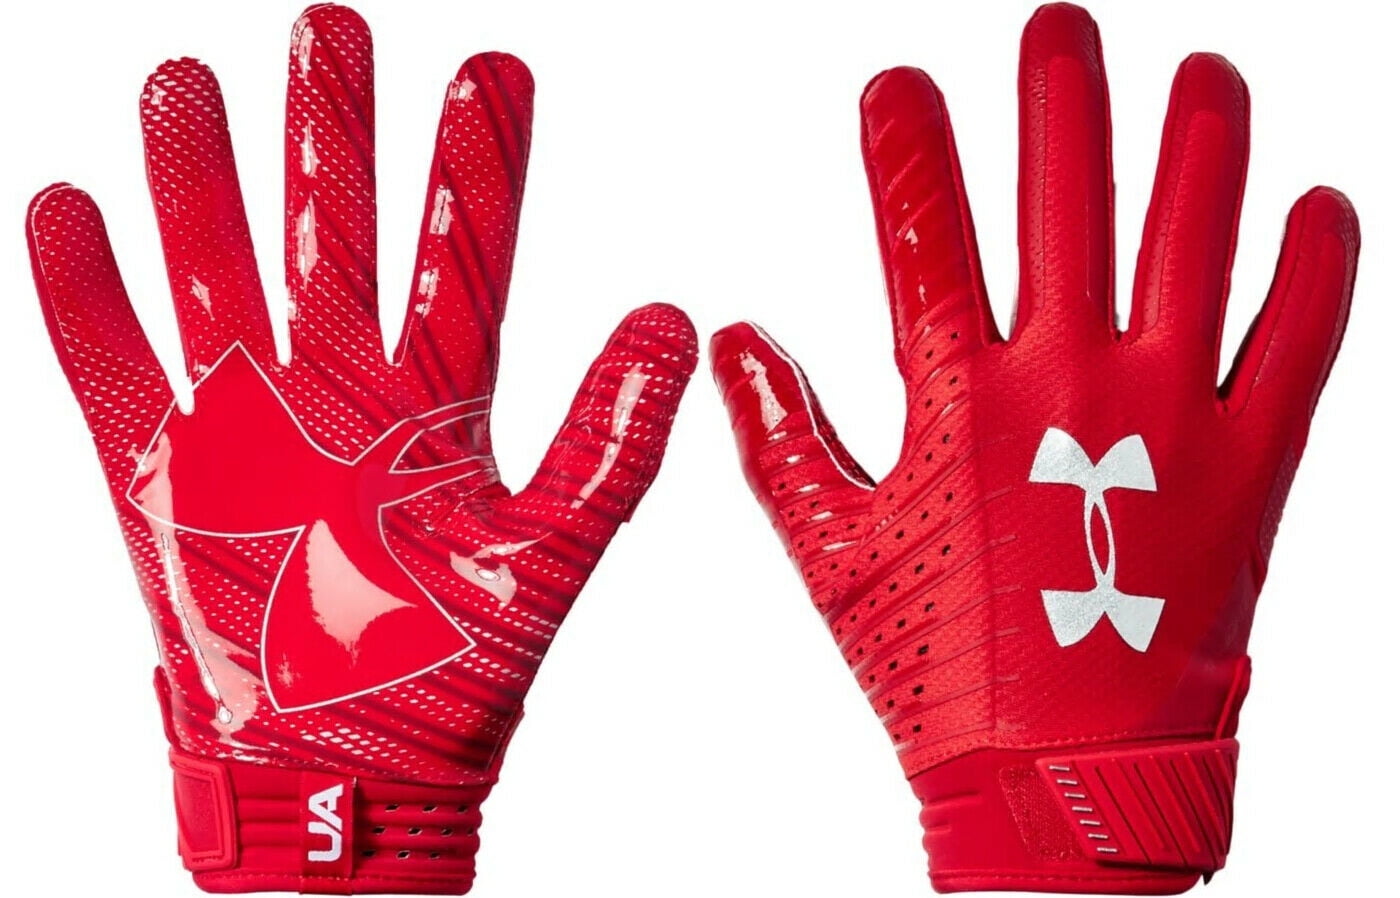 Under Armour Spotlight Limited Edition Football Gloves Men's Size XL 1326226-103 